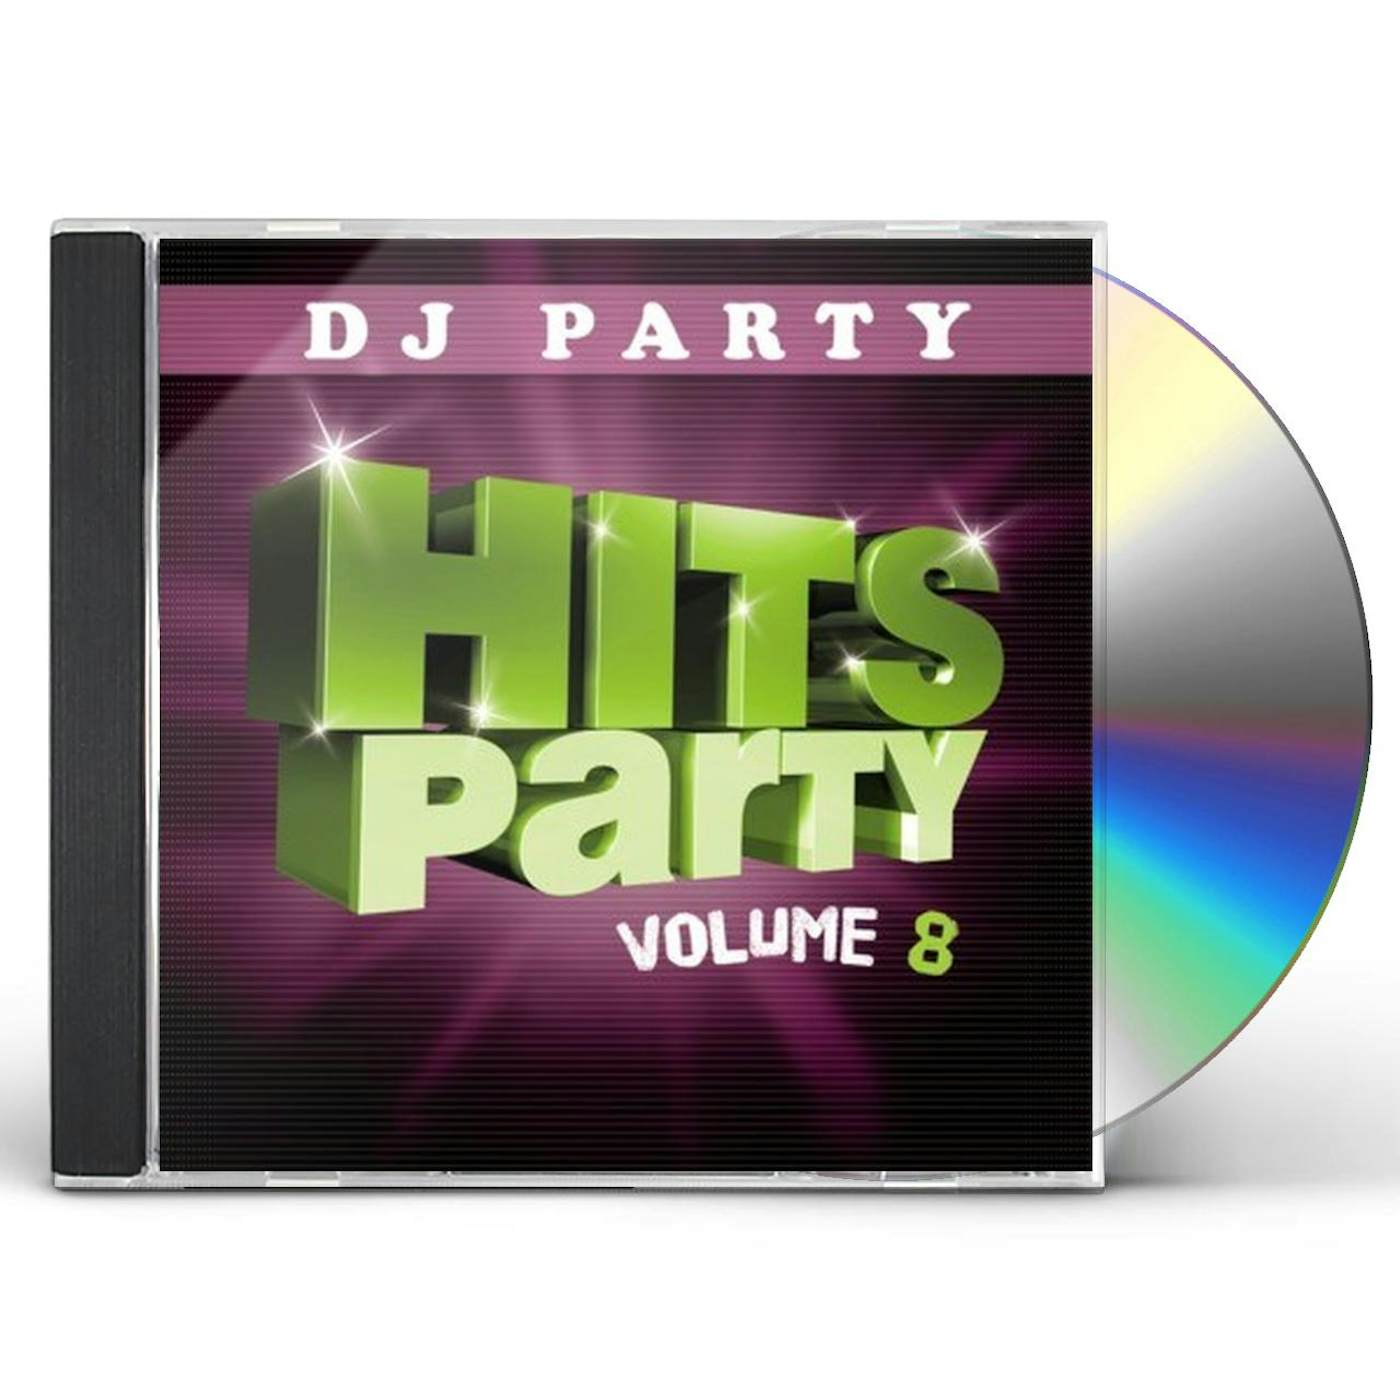 DJ Party HITS PARTY VOL. 8 CD